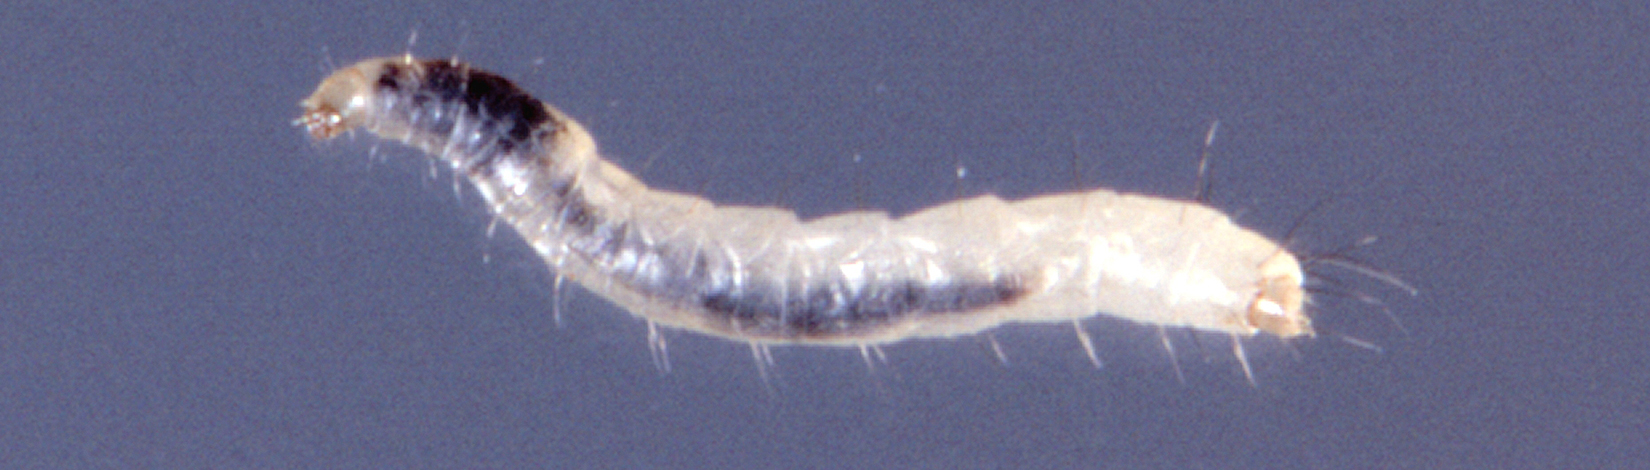 a photo of flea larva by Castner